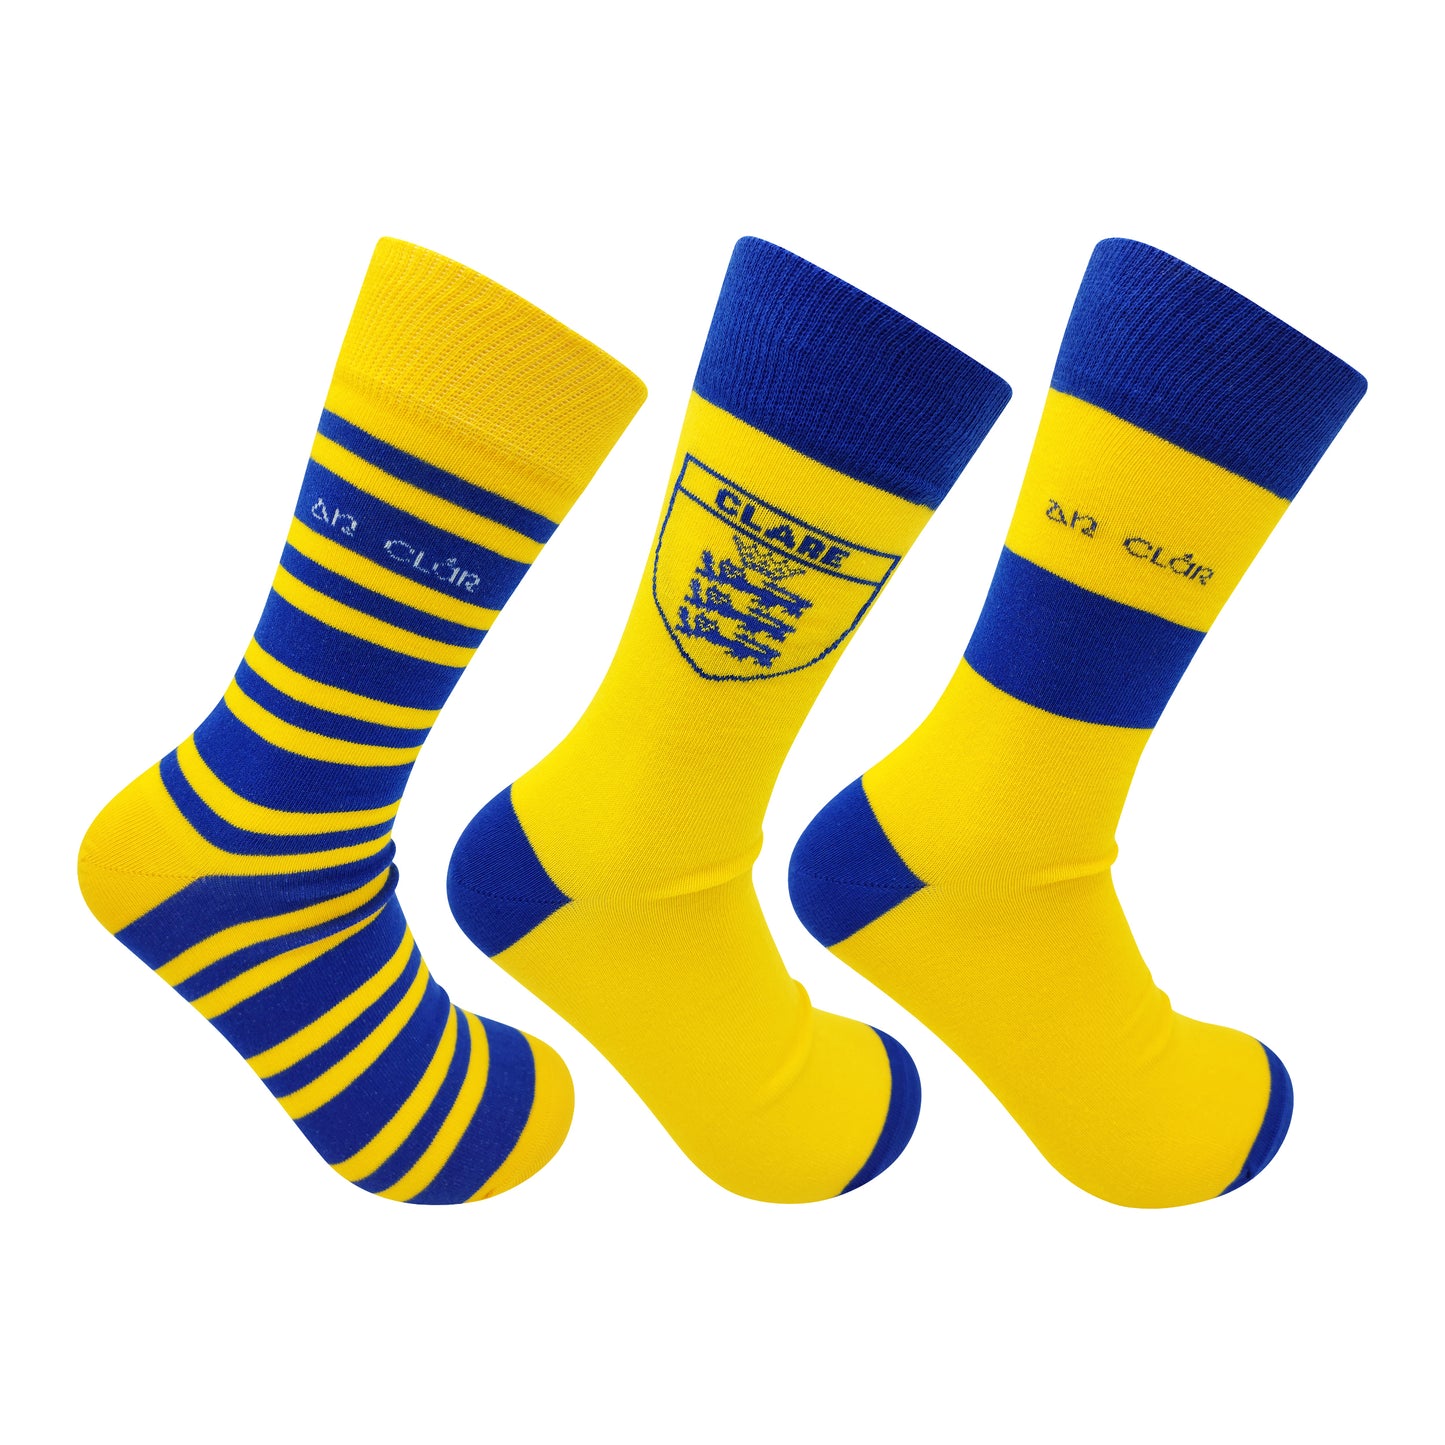 Clare Retro Sock Gift Box | Size UK 7 - 11